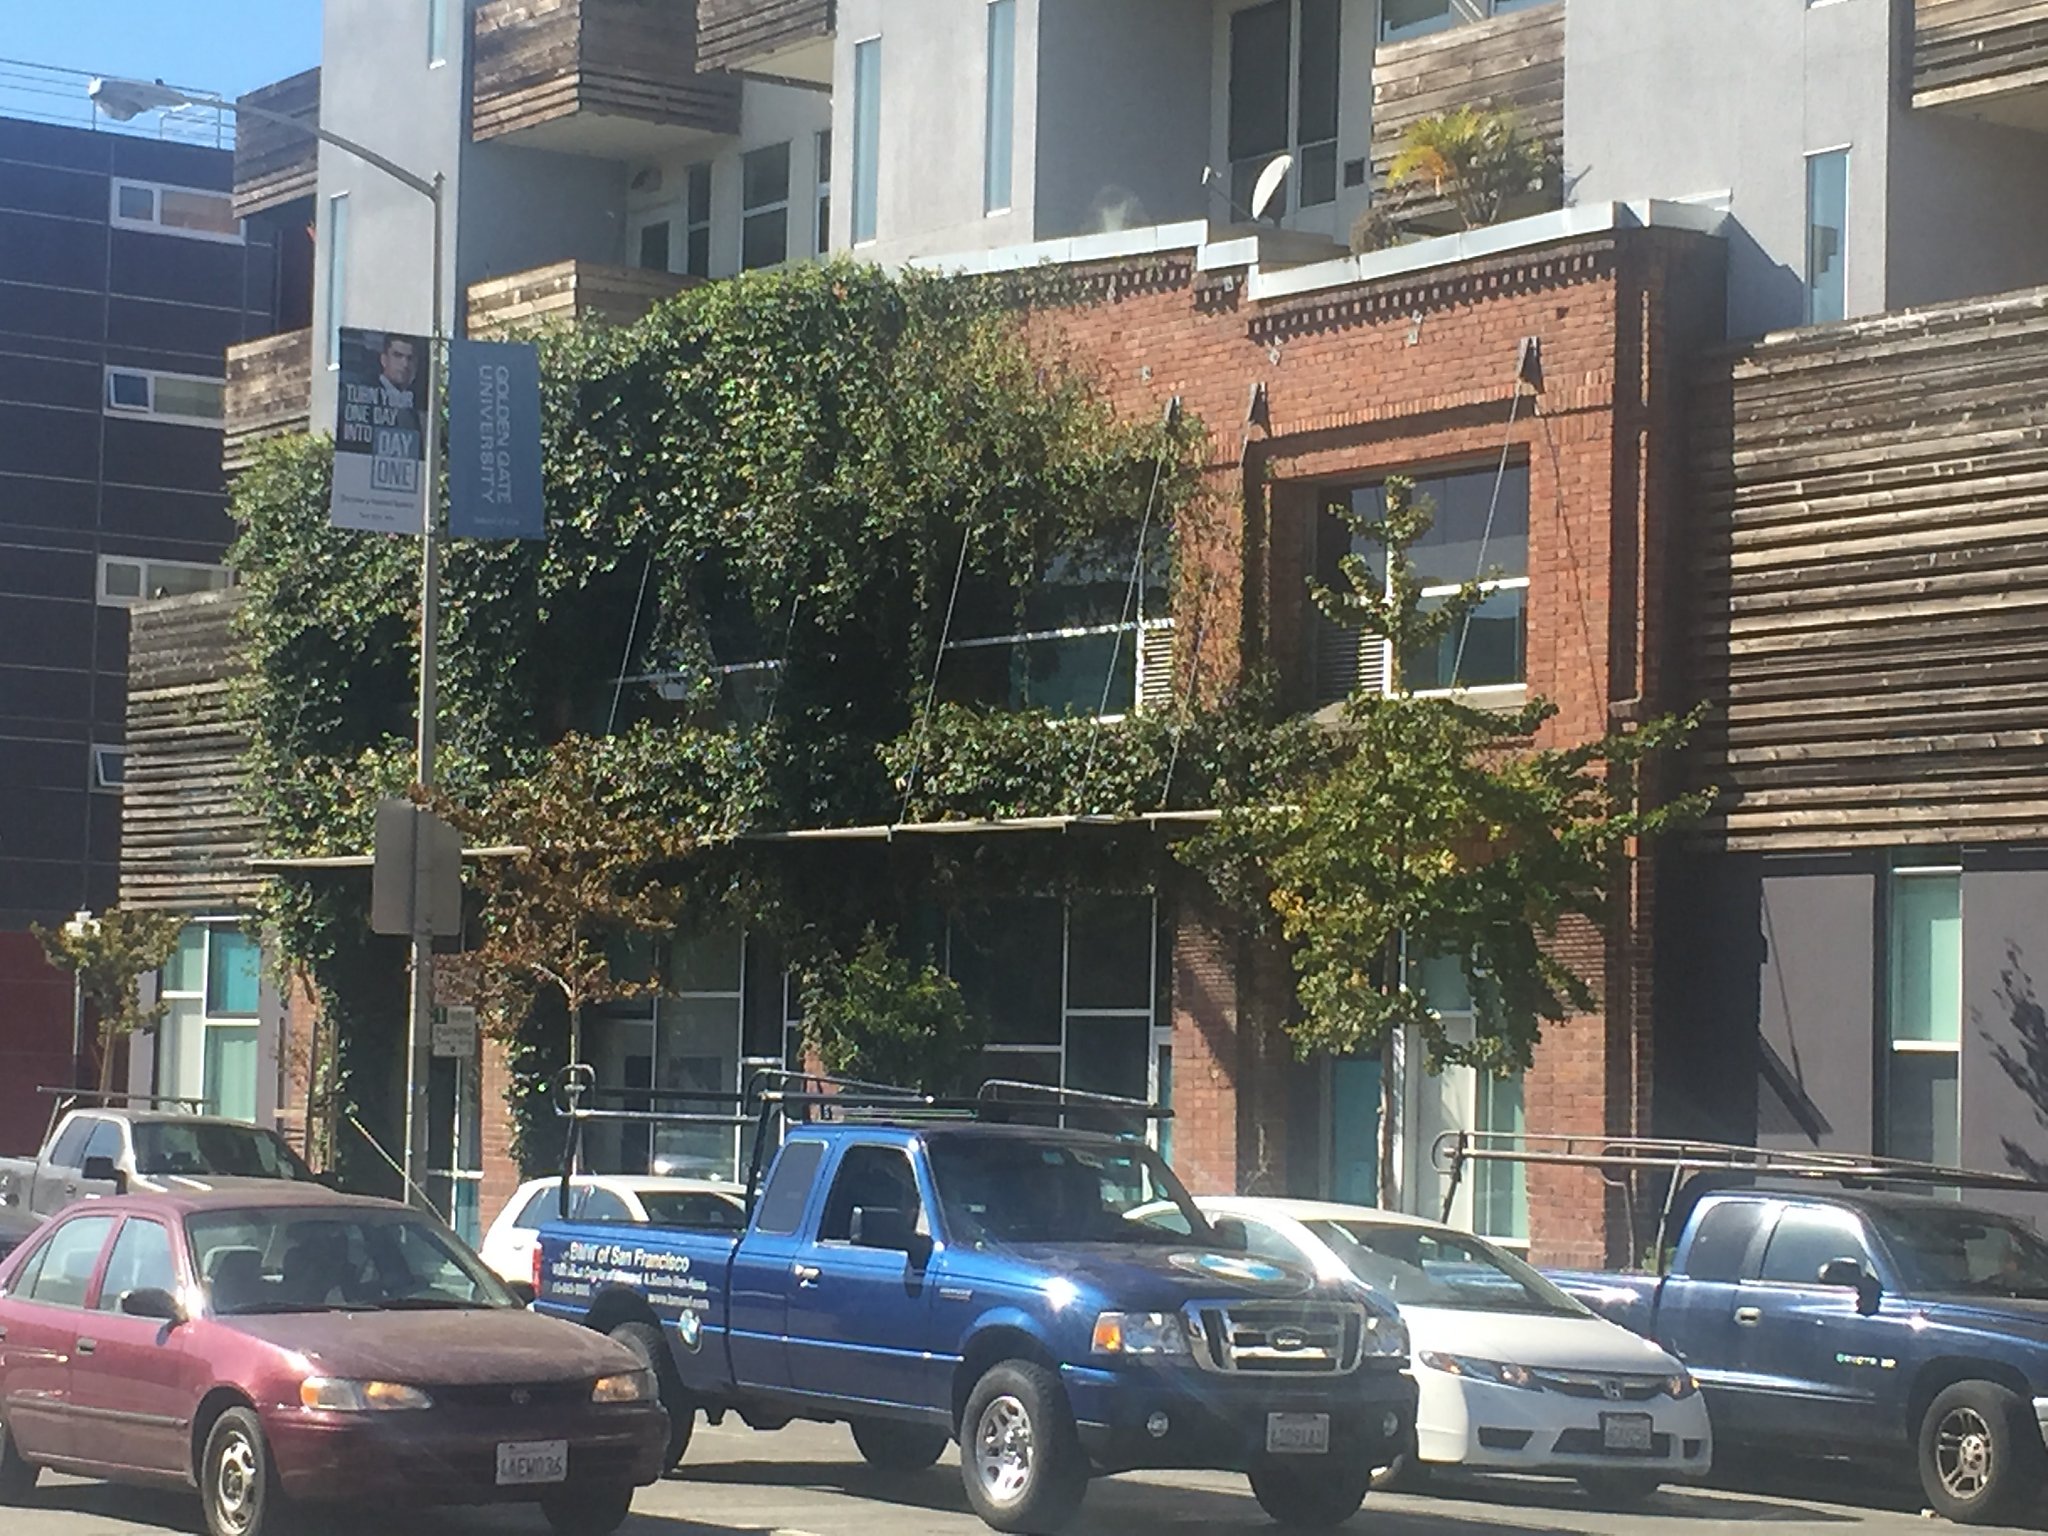 Some SF policies make housing crisis worse, think tank says - San Francisco Chronicle